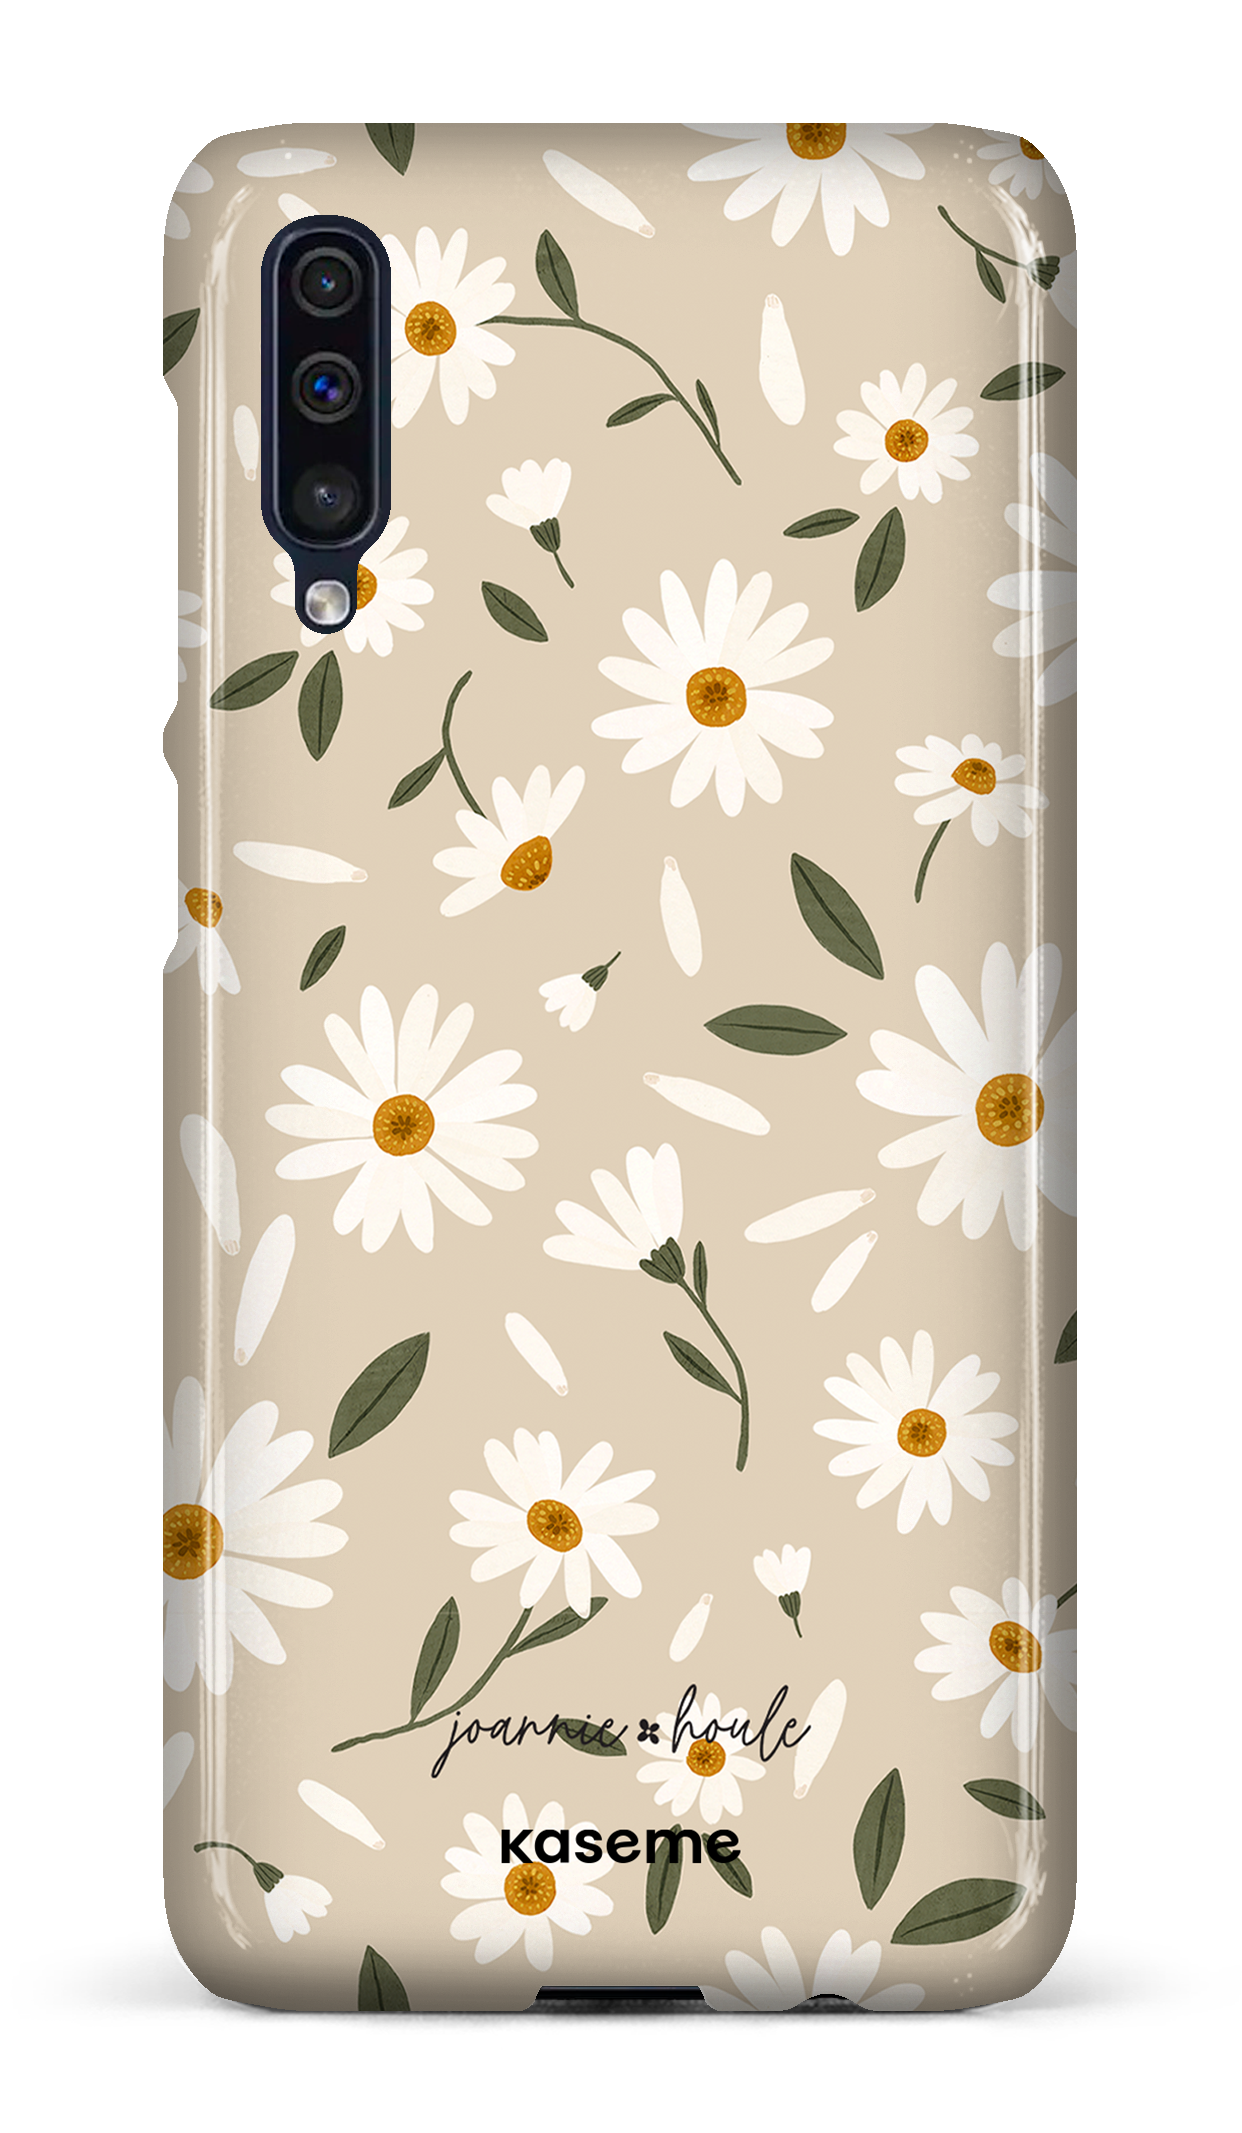 Daisy Bouquet by Joannie Houle - Galaxy A50